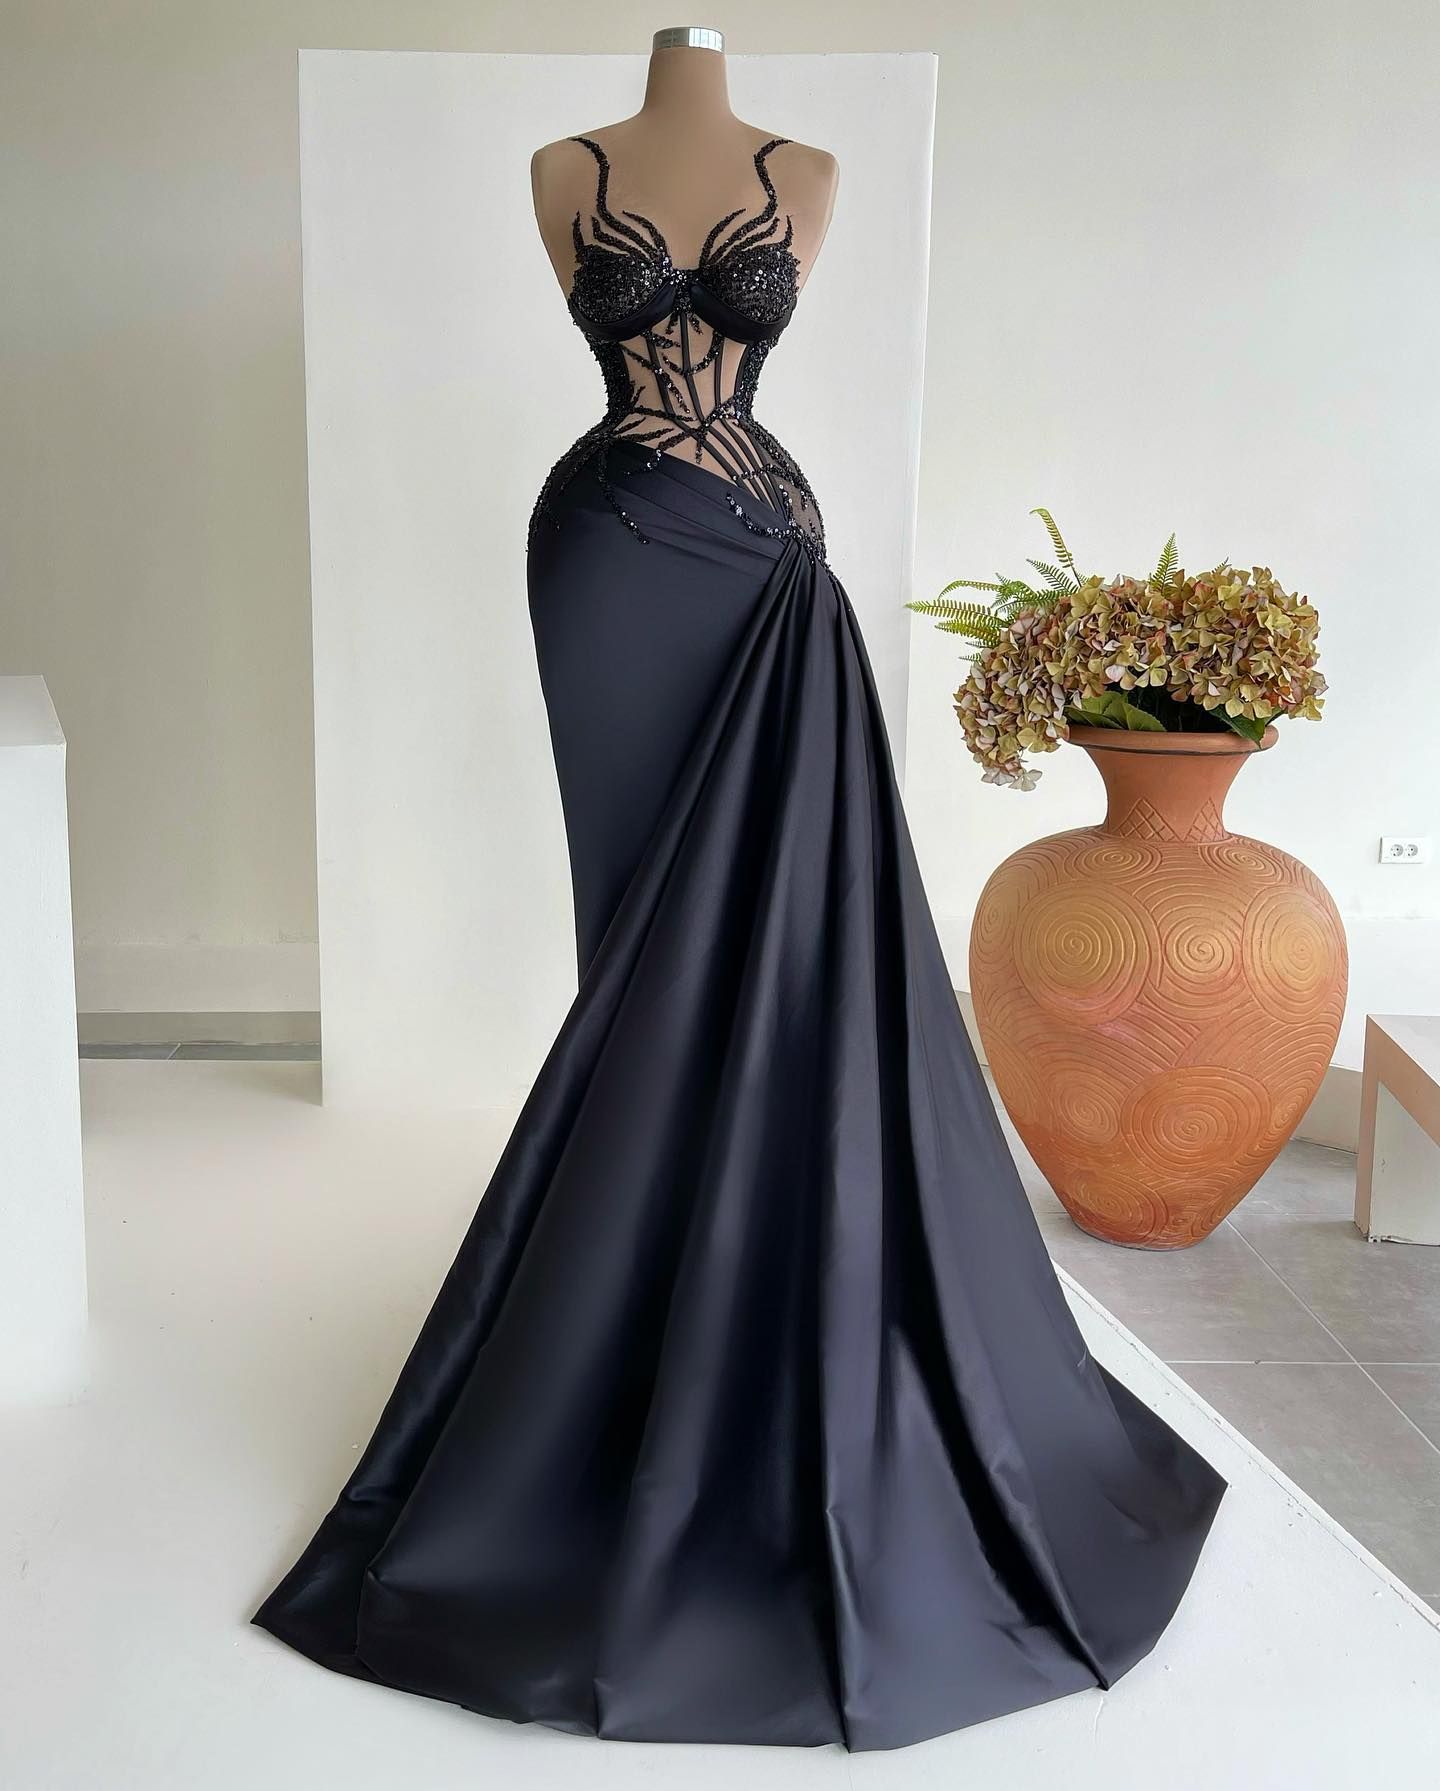 Sexy Black Mermaid Prom Dresses Beaded Boned Illusion Neck Women Gowns ...